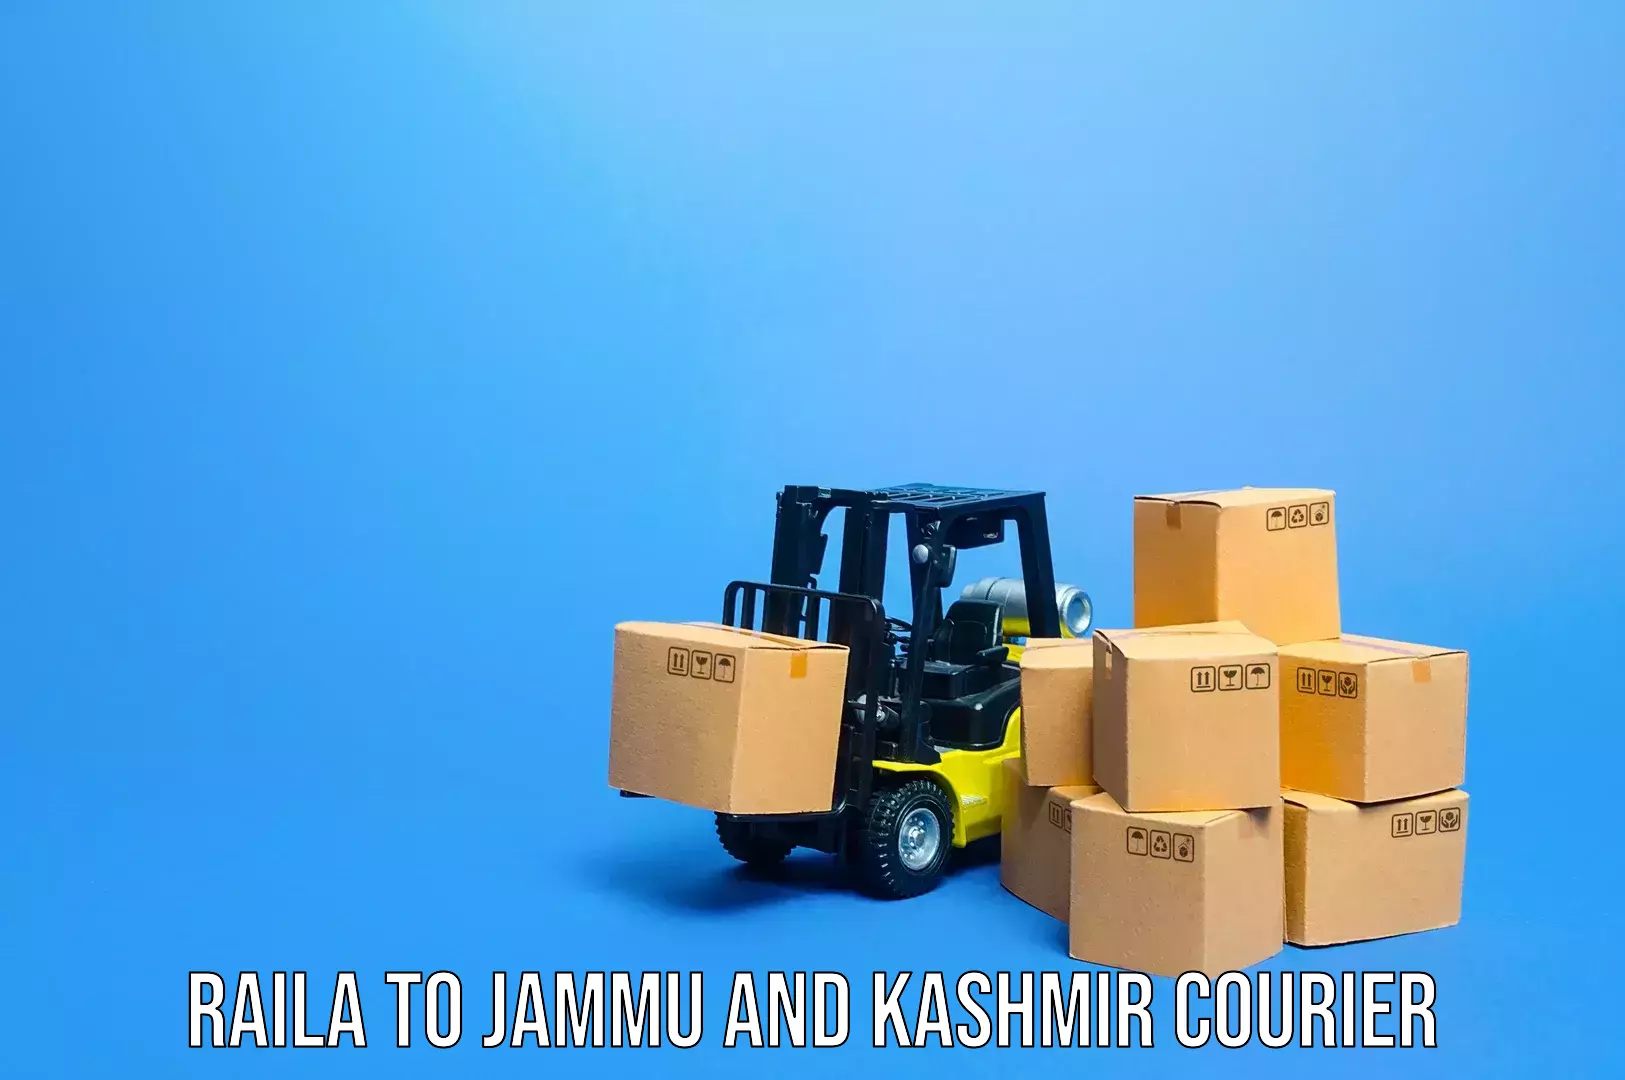 Luggage delivery app Raila to University of Jammu